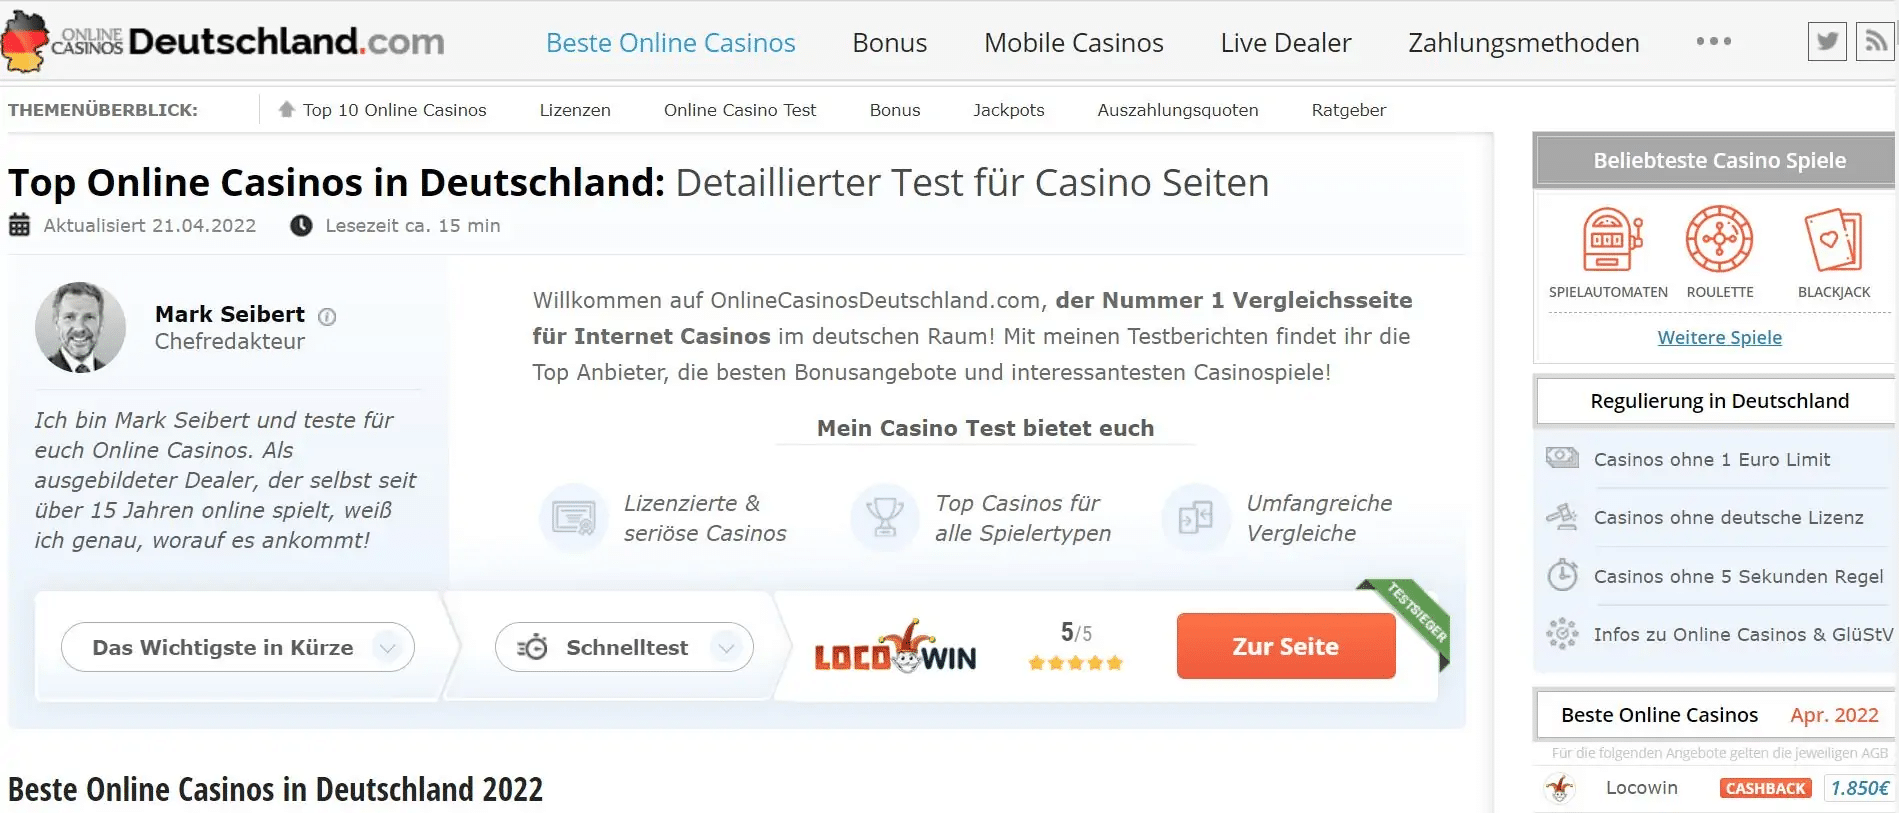 Onlinecasinosdeutschland.com im SEO Test